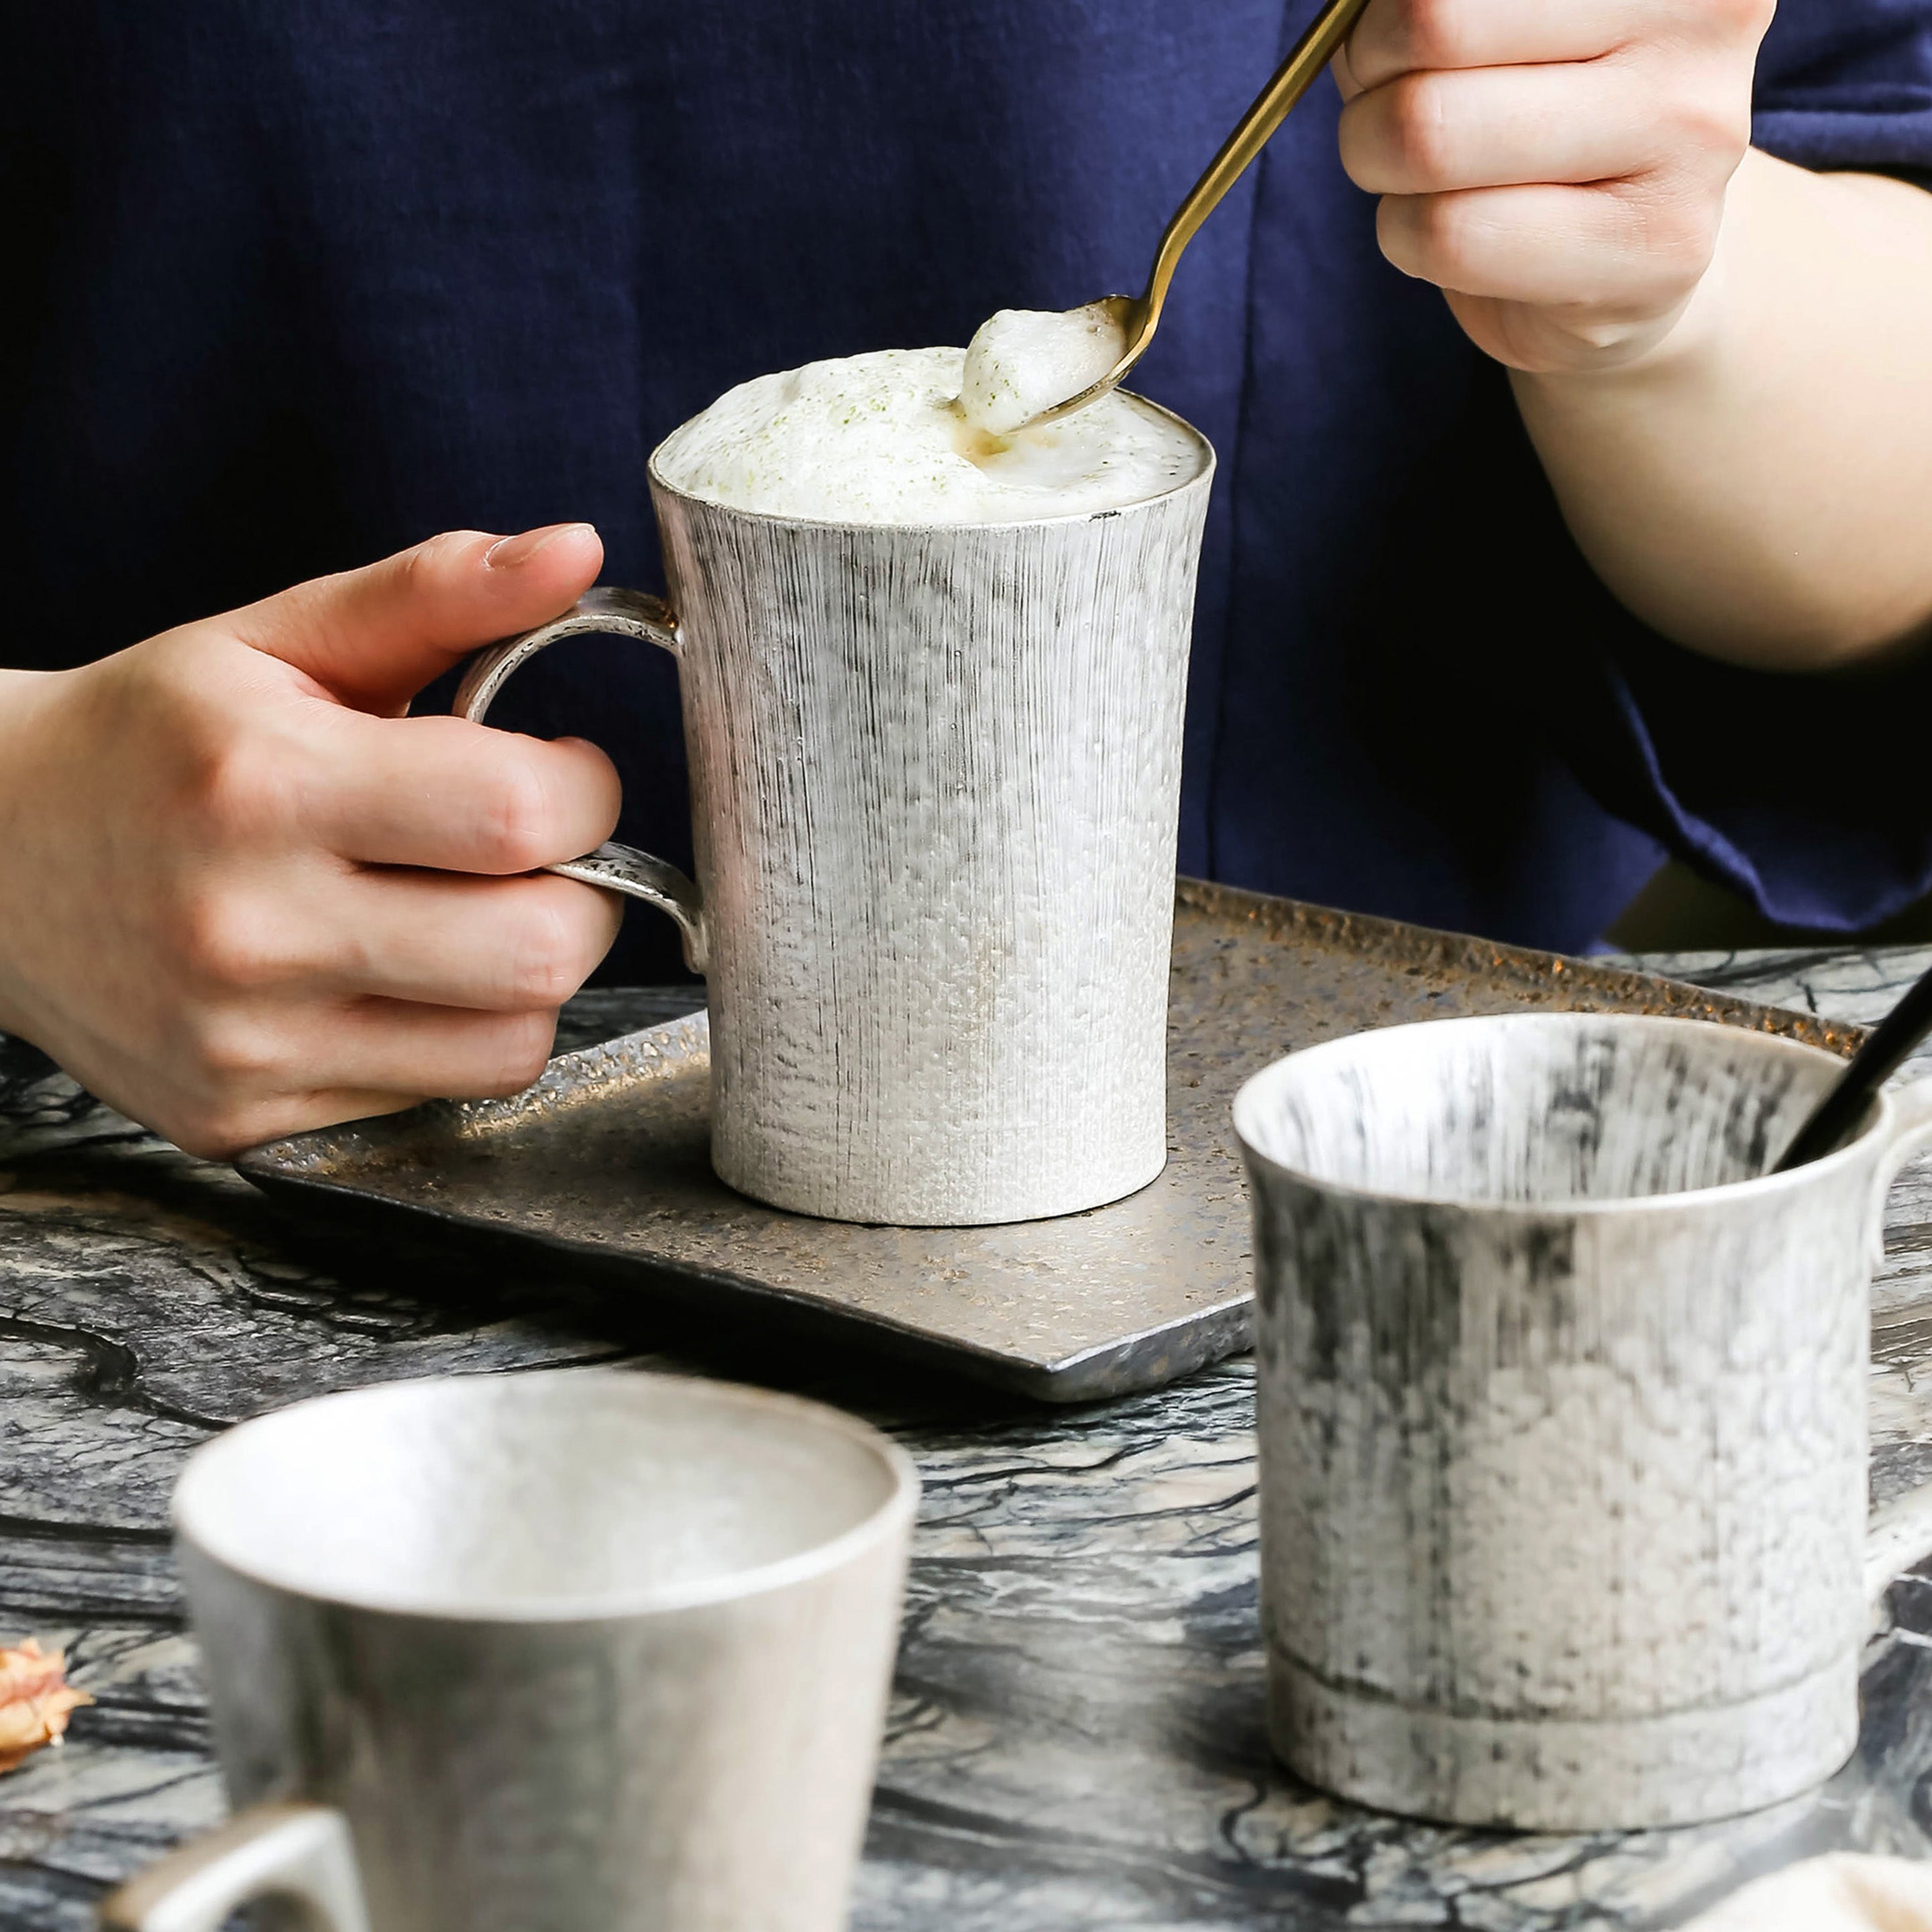 Handmade Modern Coffee Mug